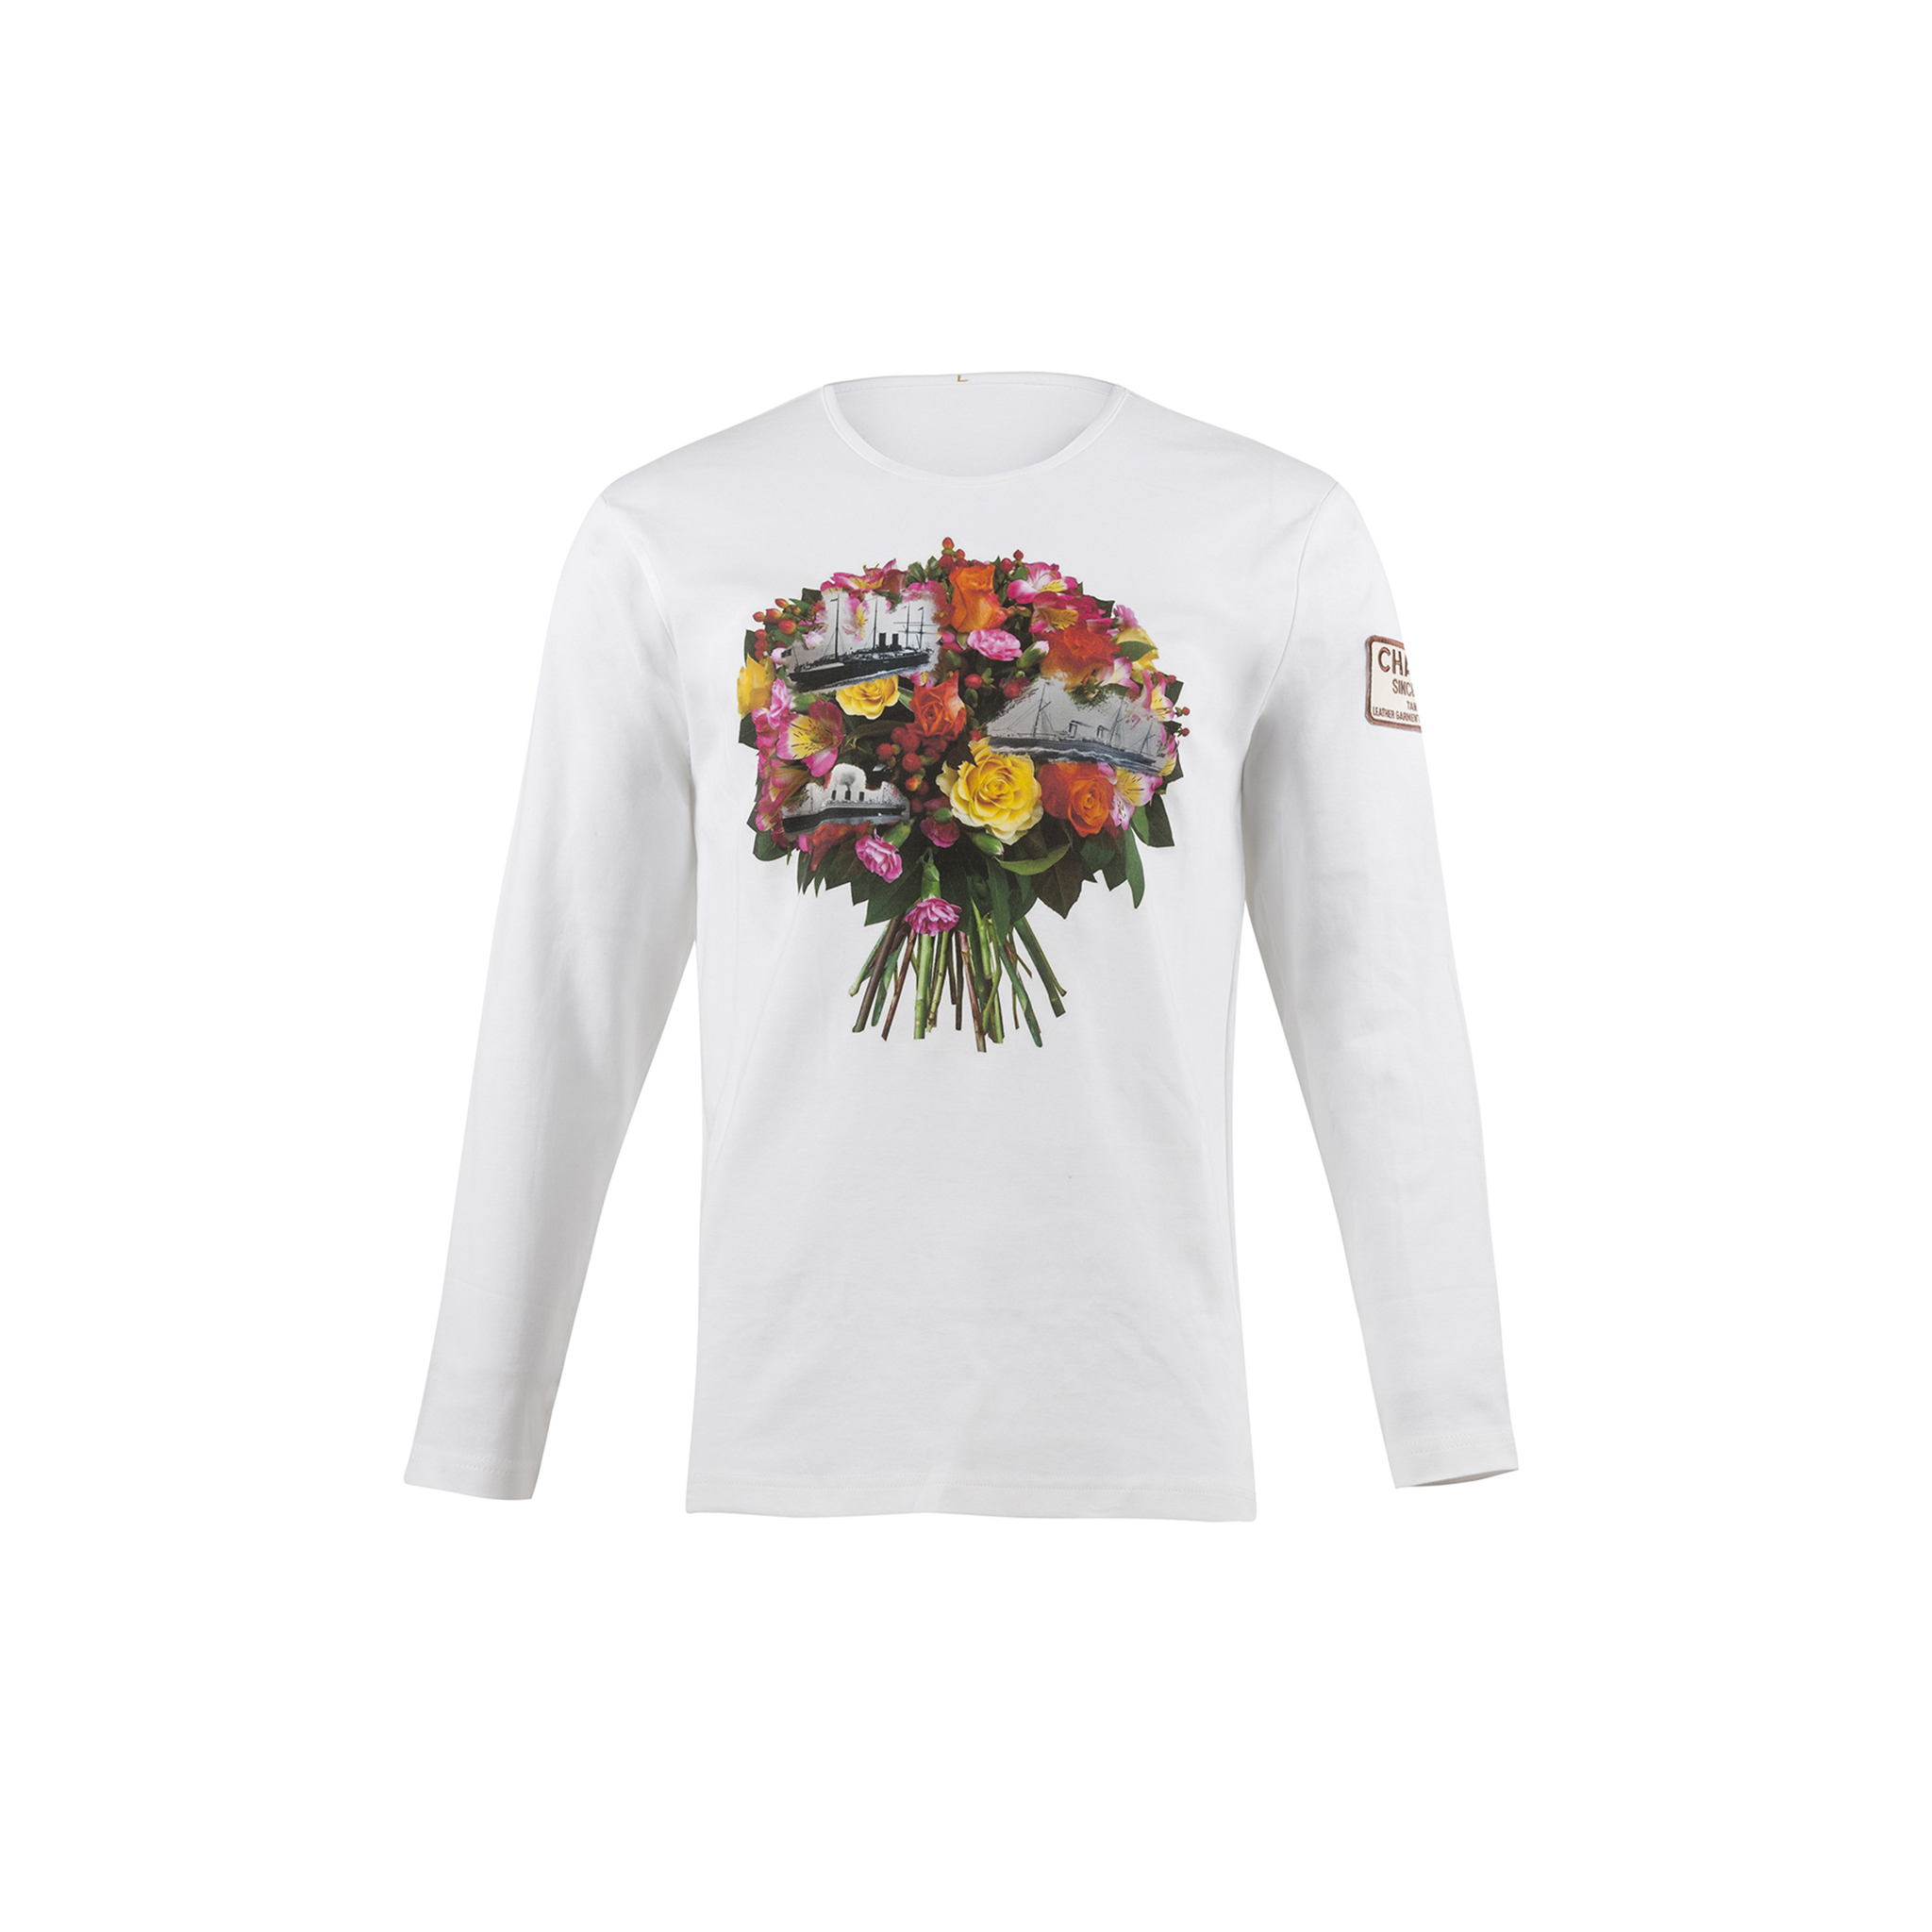 T-shirt Flowers - Cotton jersey - White color